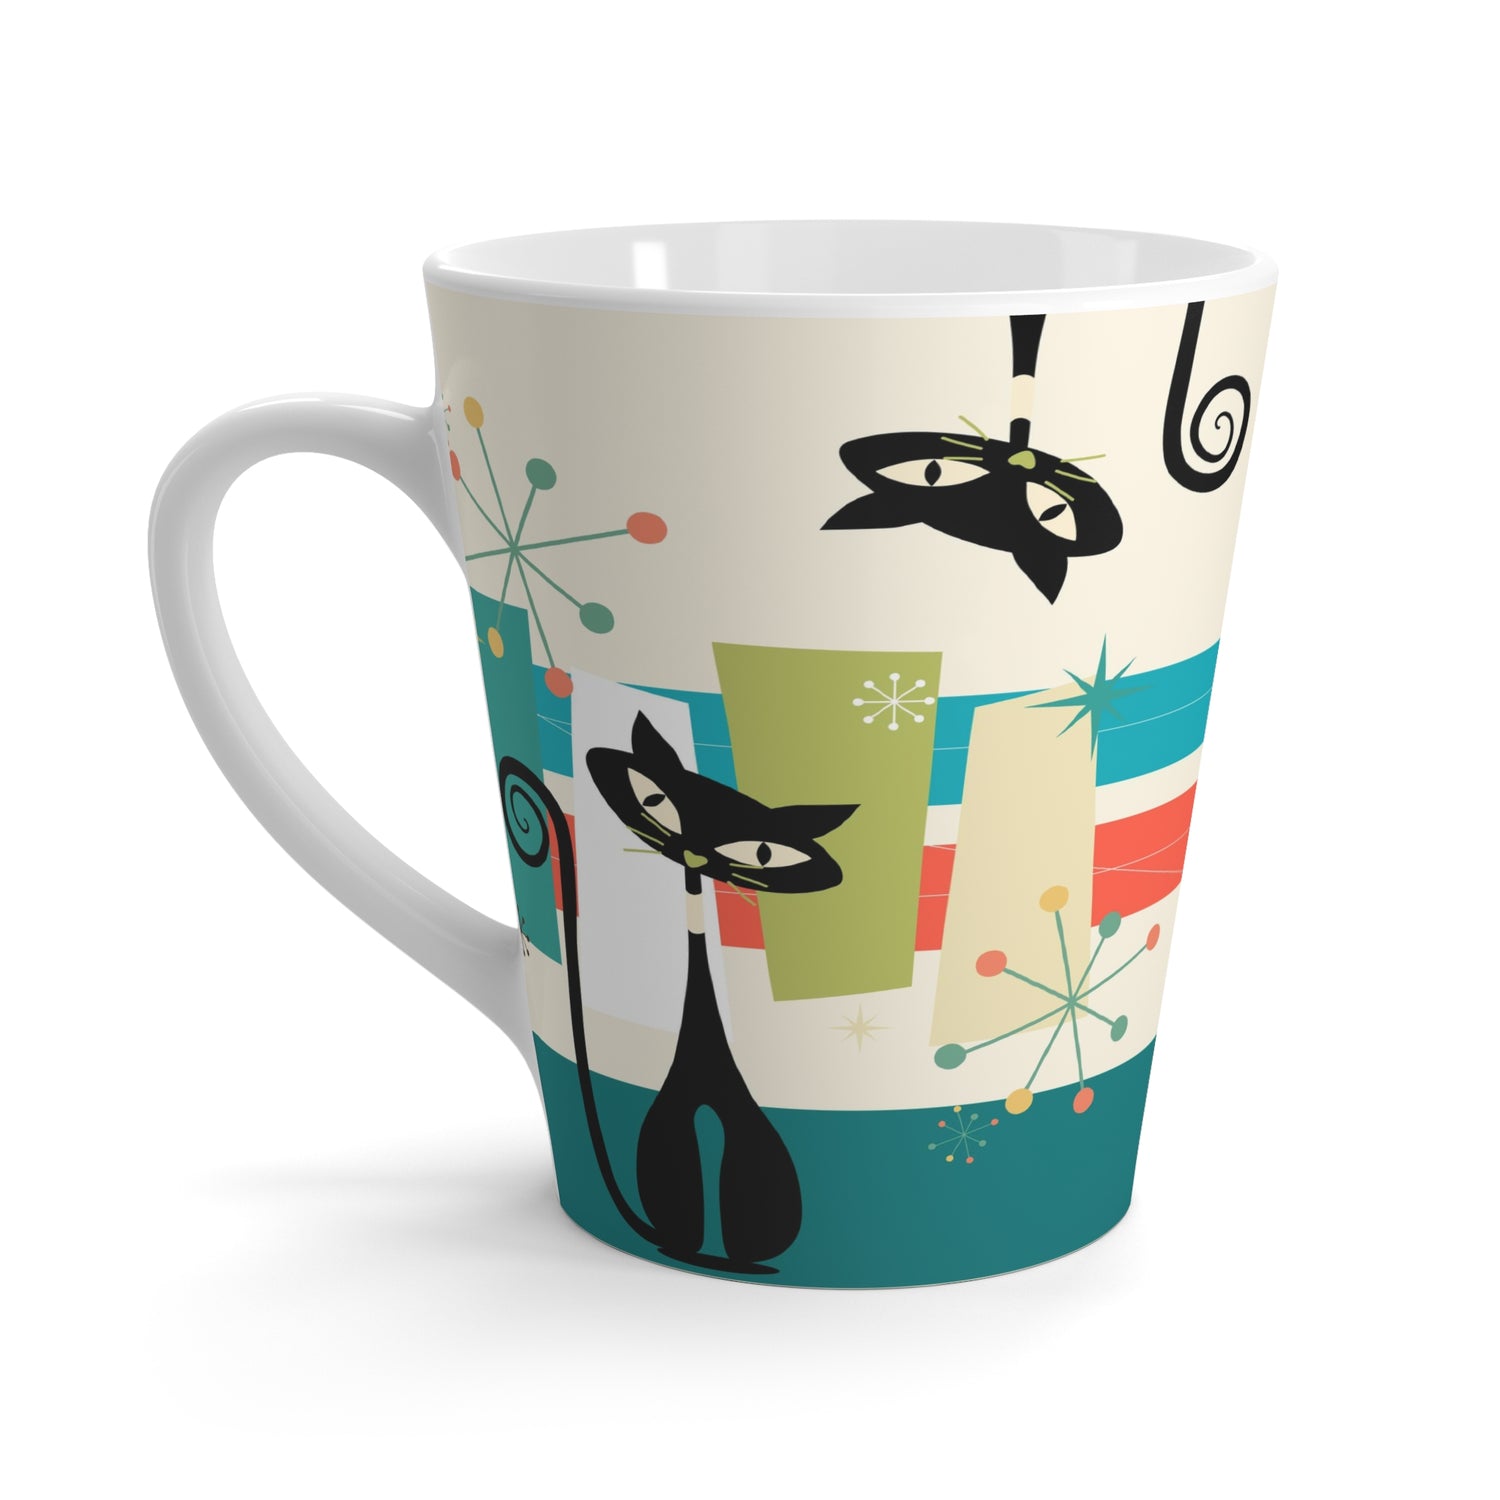 Atomic Cats, Quirky Kitschy Mid Century Modern, Coffee, Tea Latte Mug